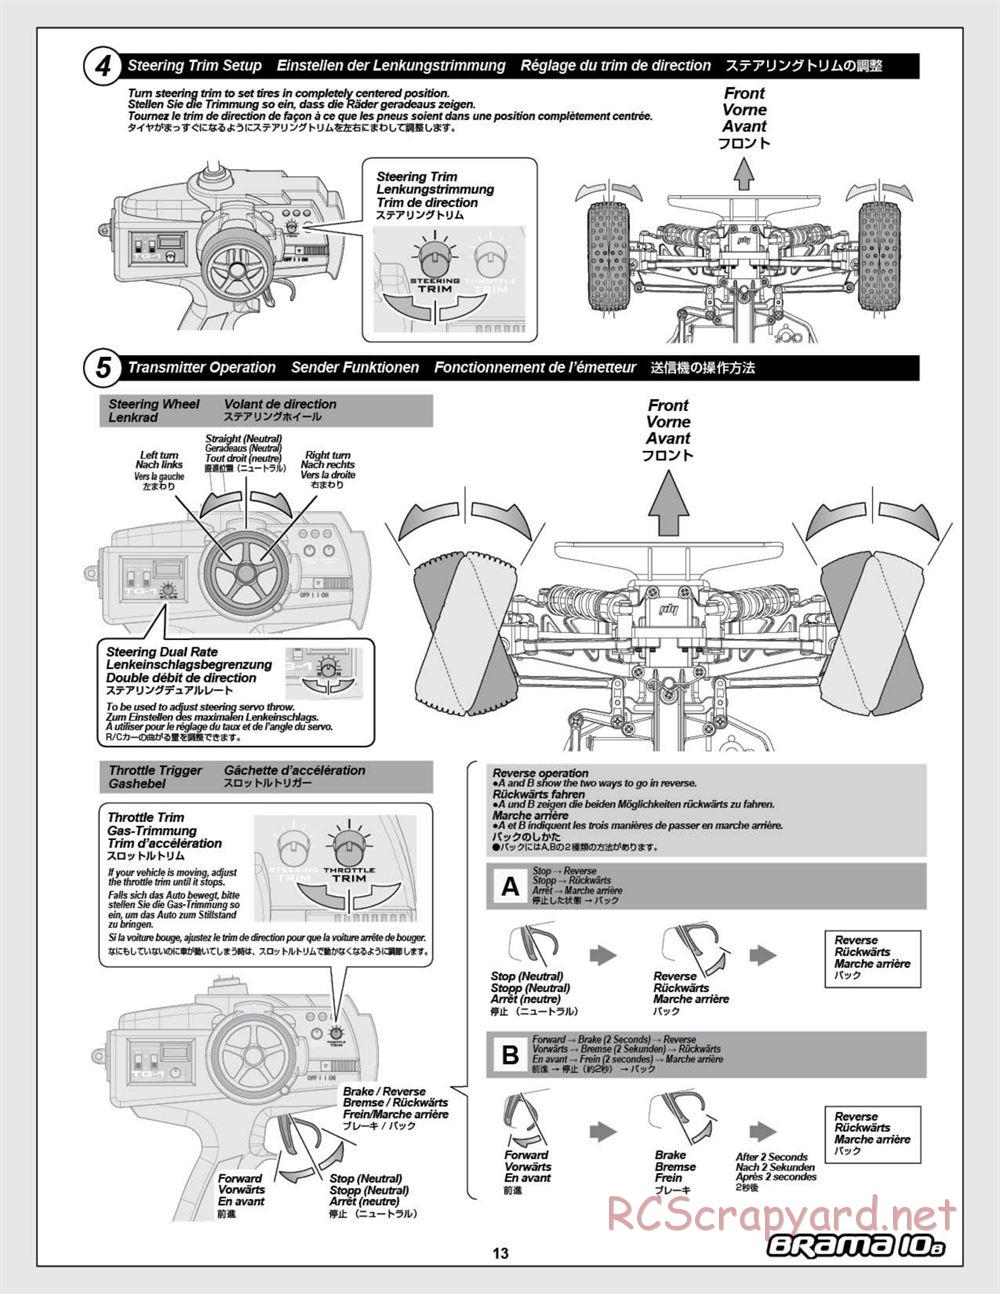 HPI - Brama 10B - Manual - Page 13